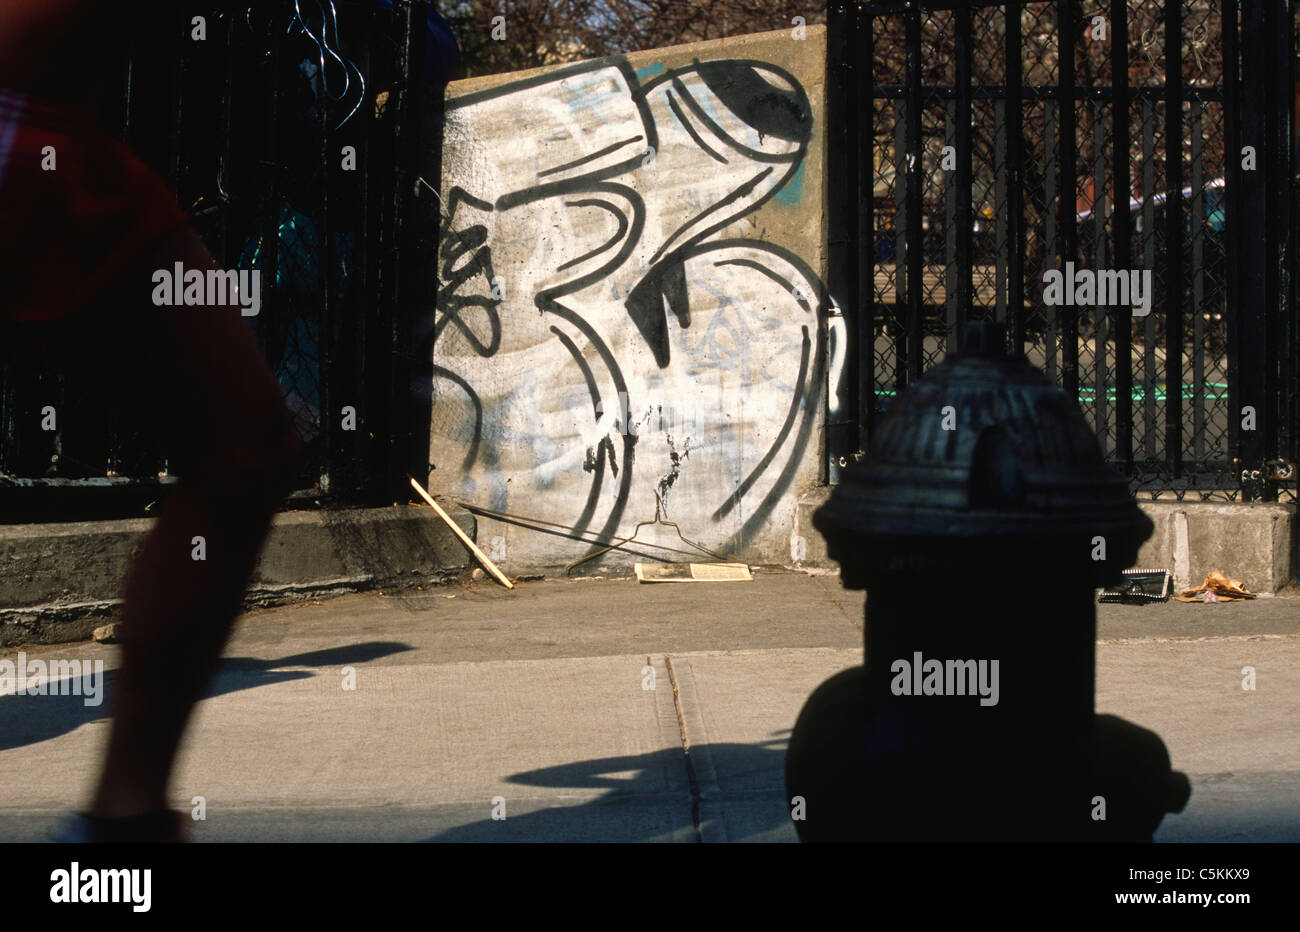 Installation Art, grafitti tag on houston Street, NYC Stock Photo